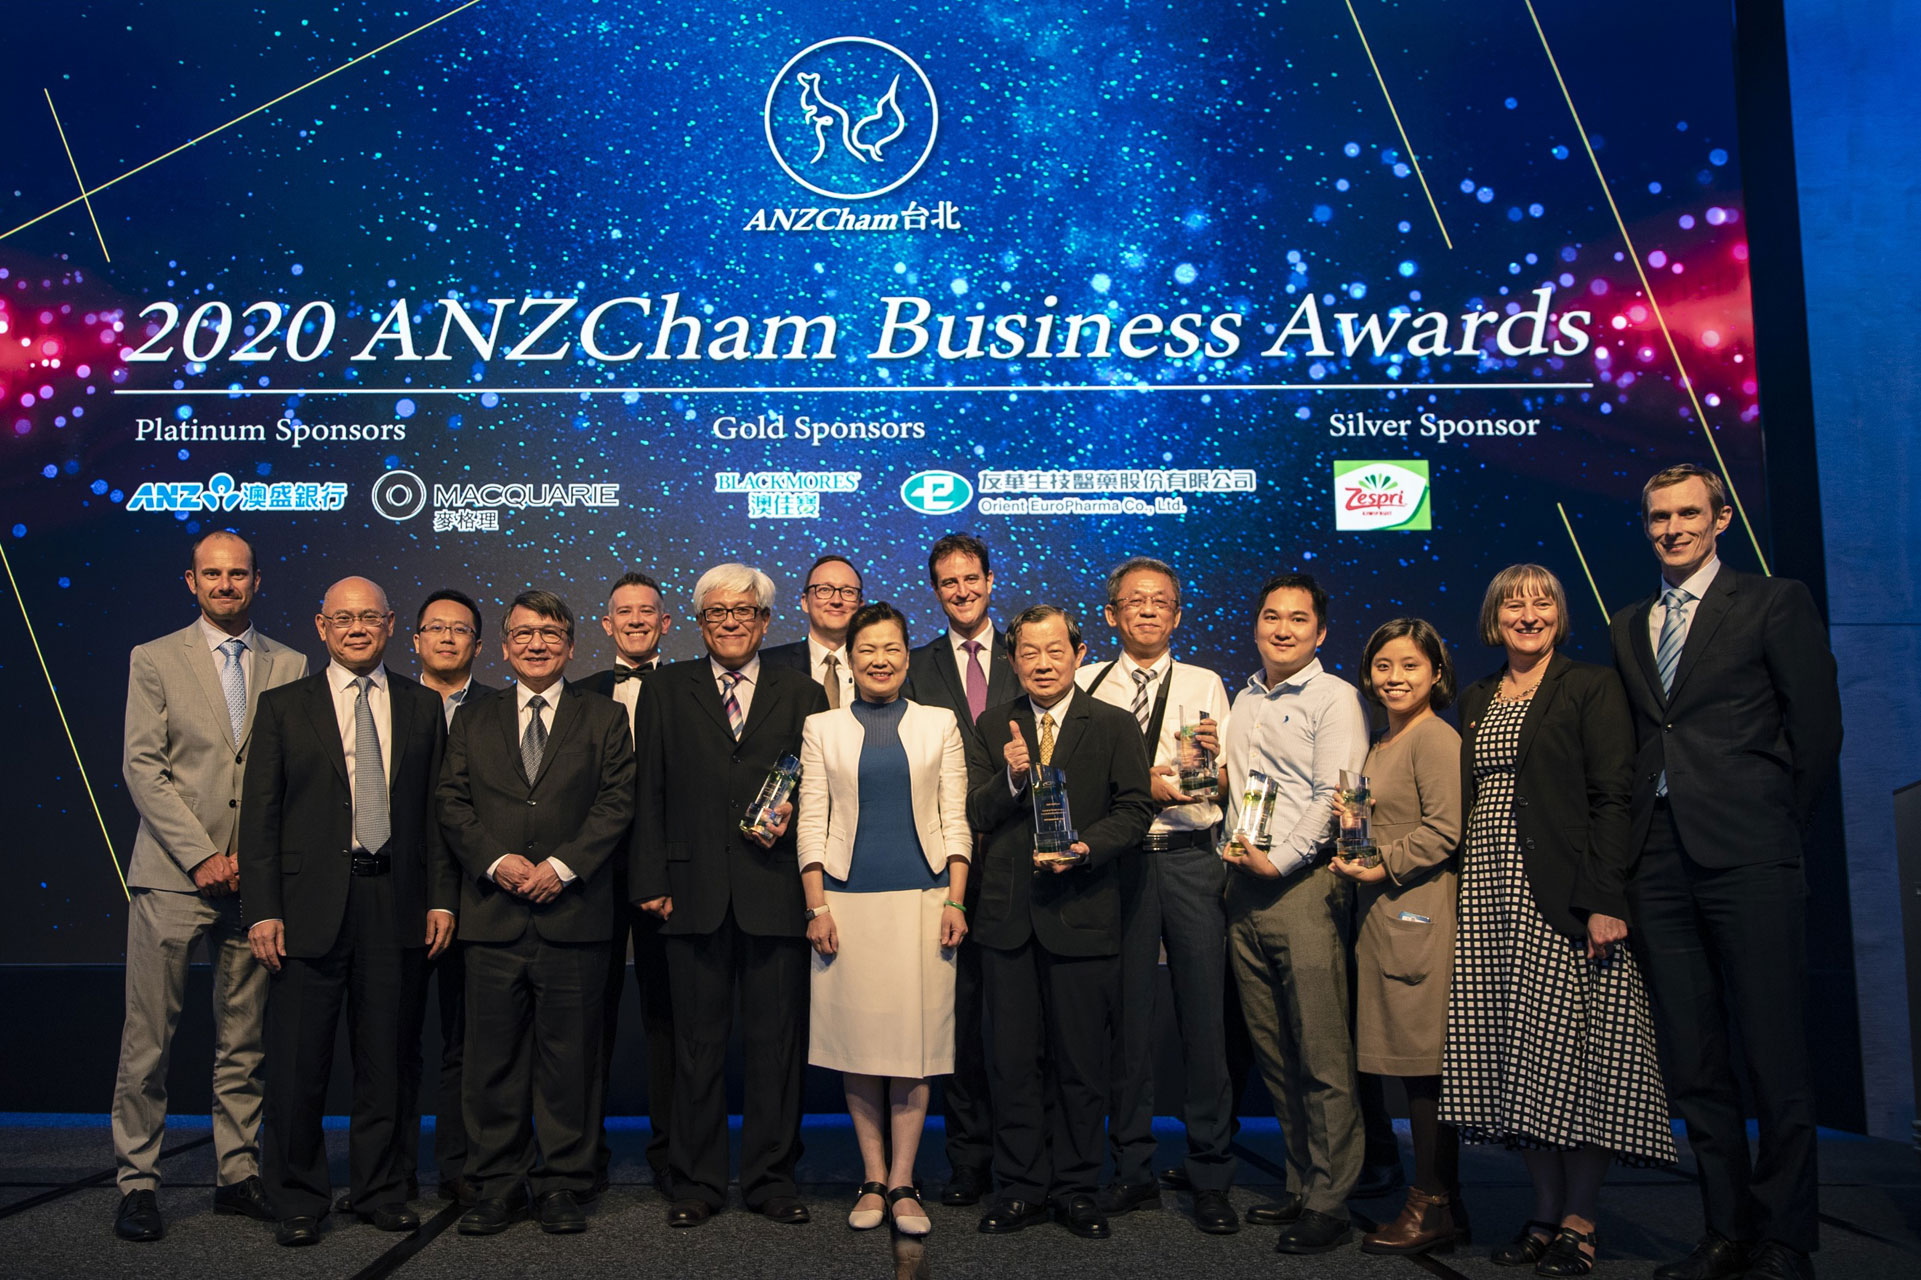 2020 ANZCham Business Awards Photo-2